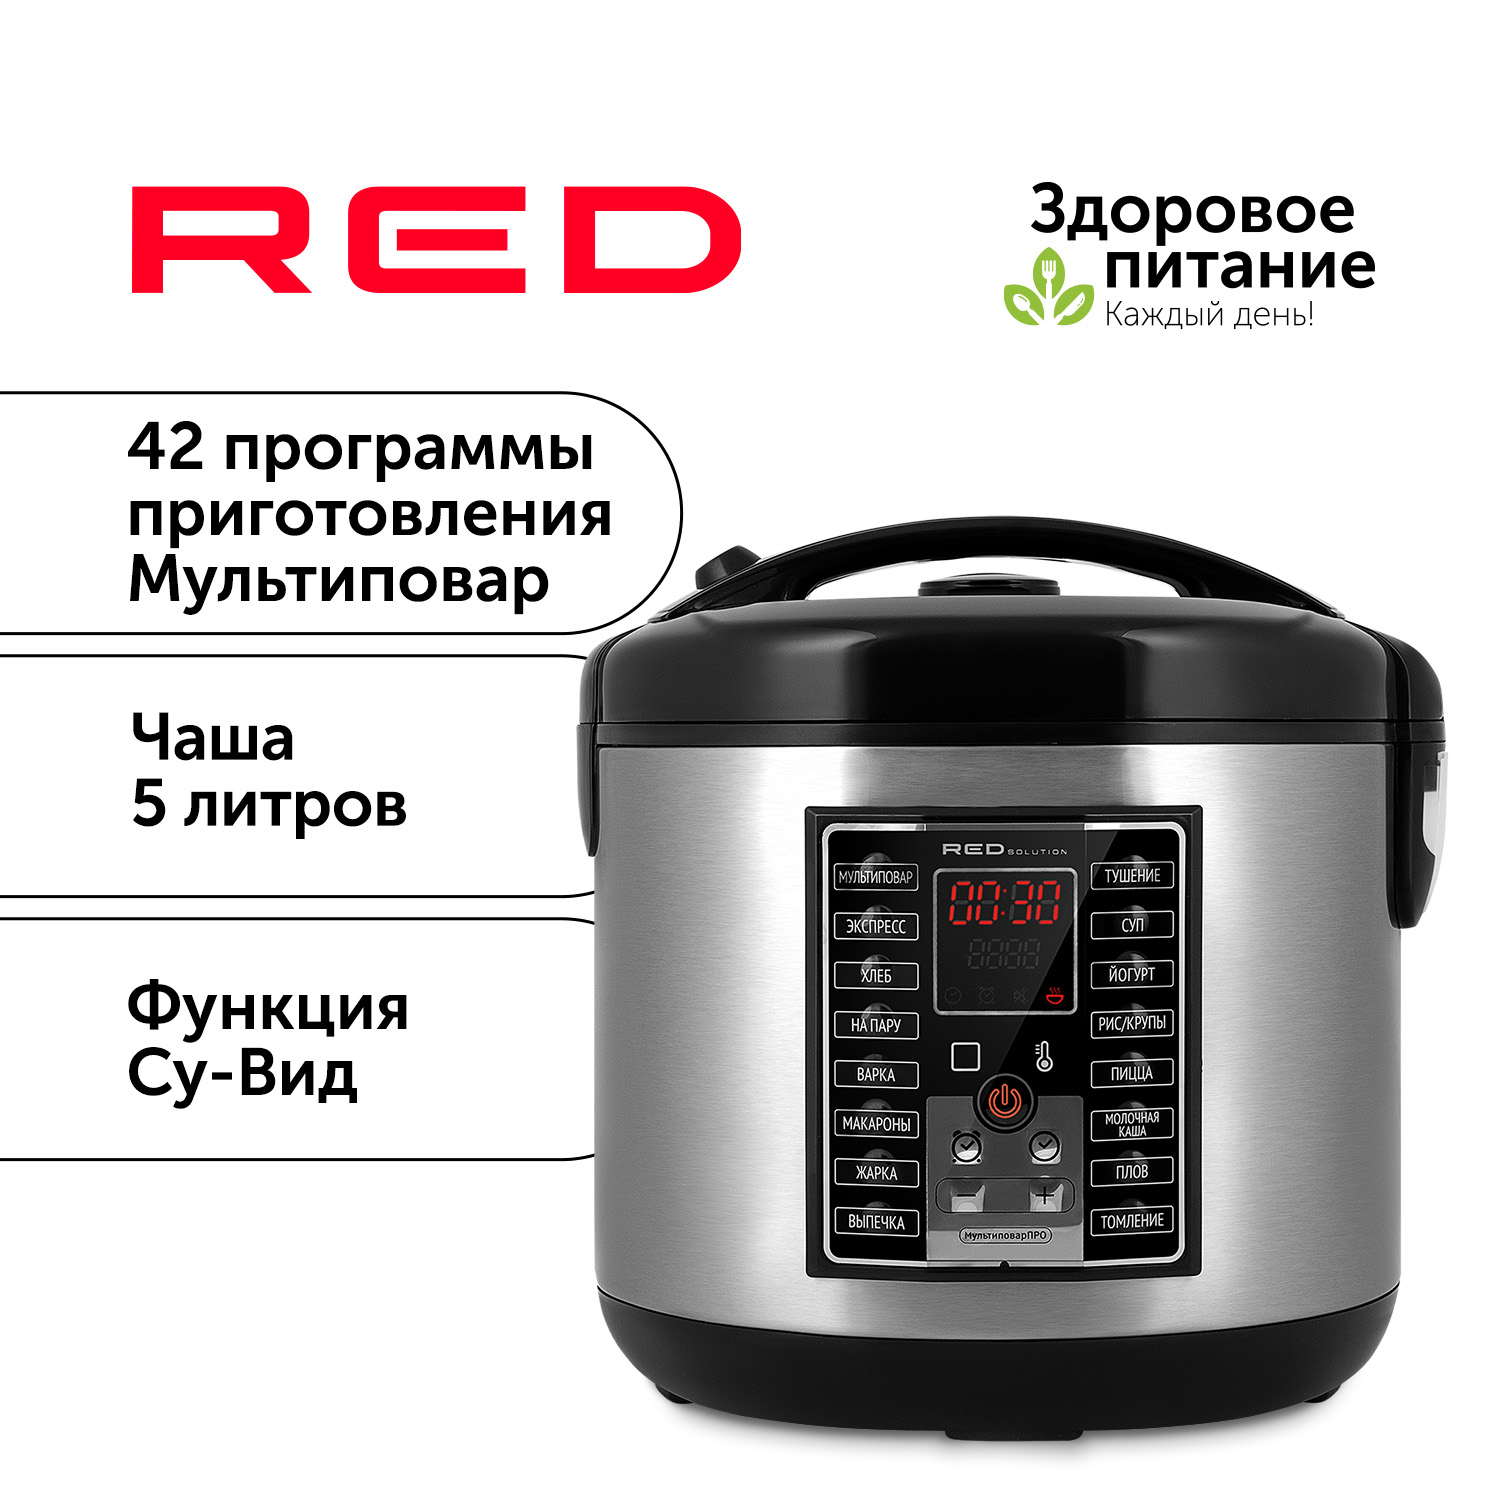 Мультиварка RED SOLUTION RMC-M25 серебристый, черный мультиварка red solution rmc m40s серая черная